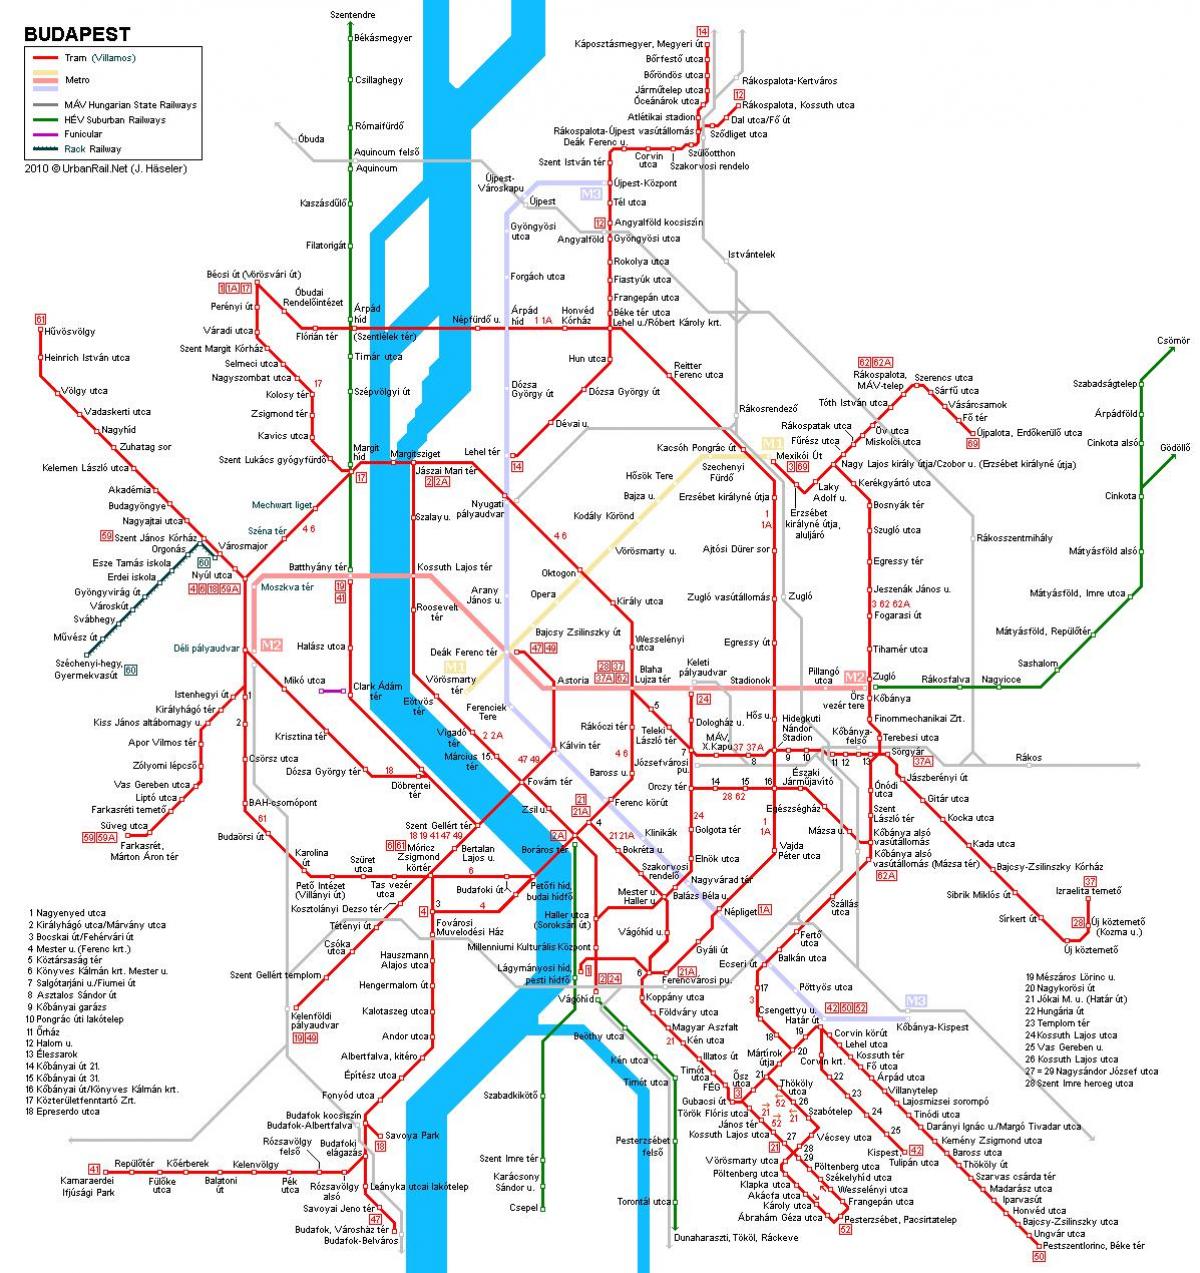 budapest metro mapa aireportua